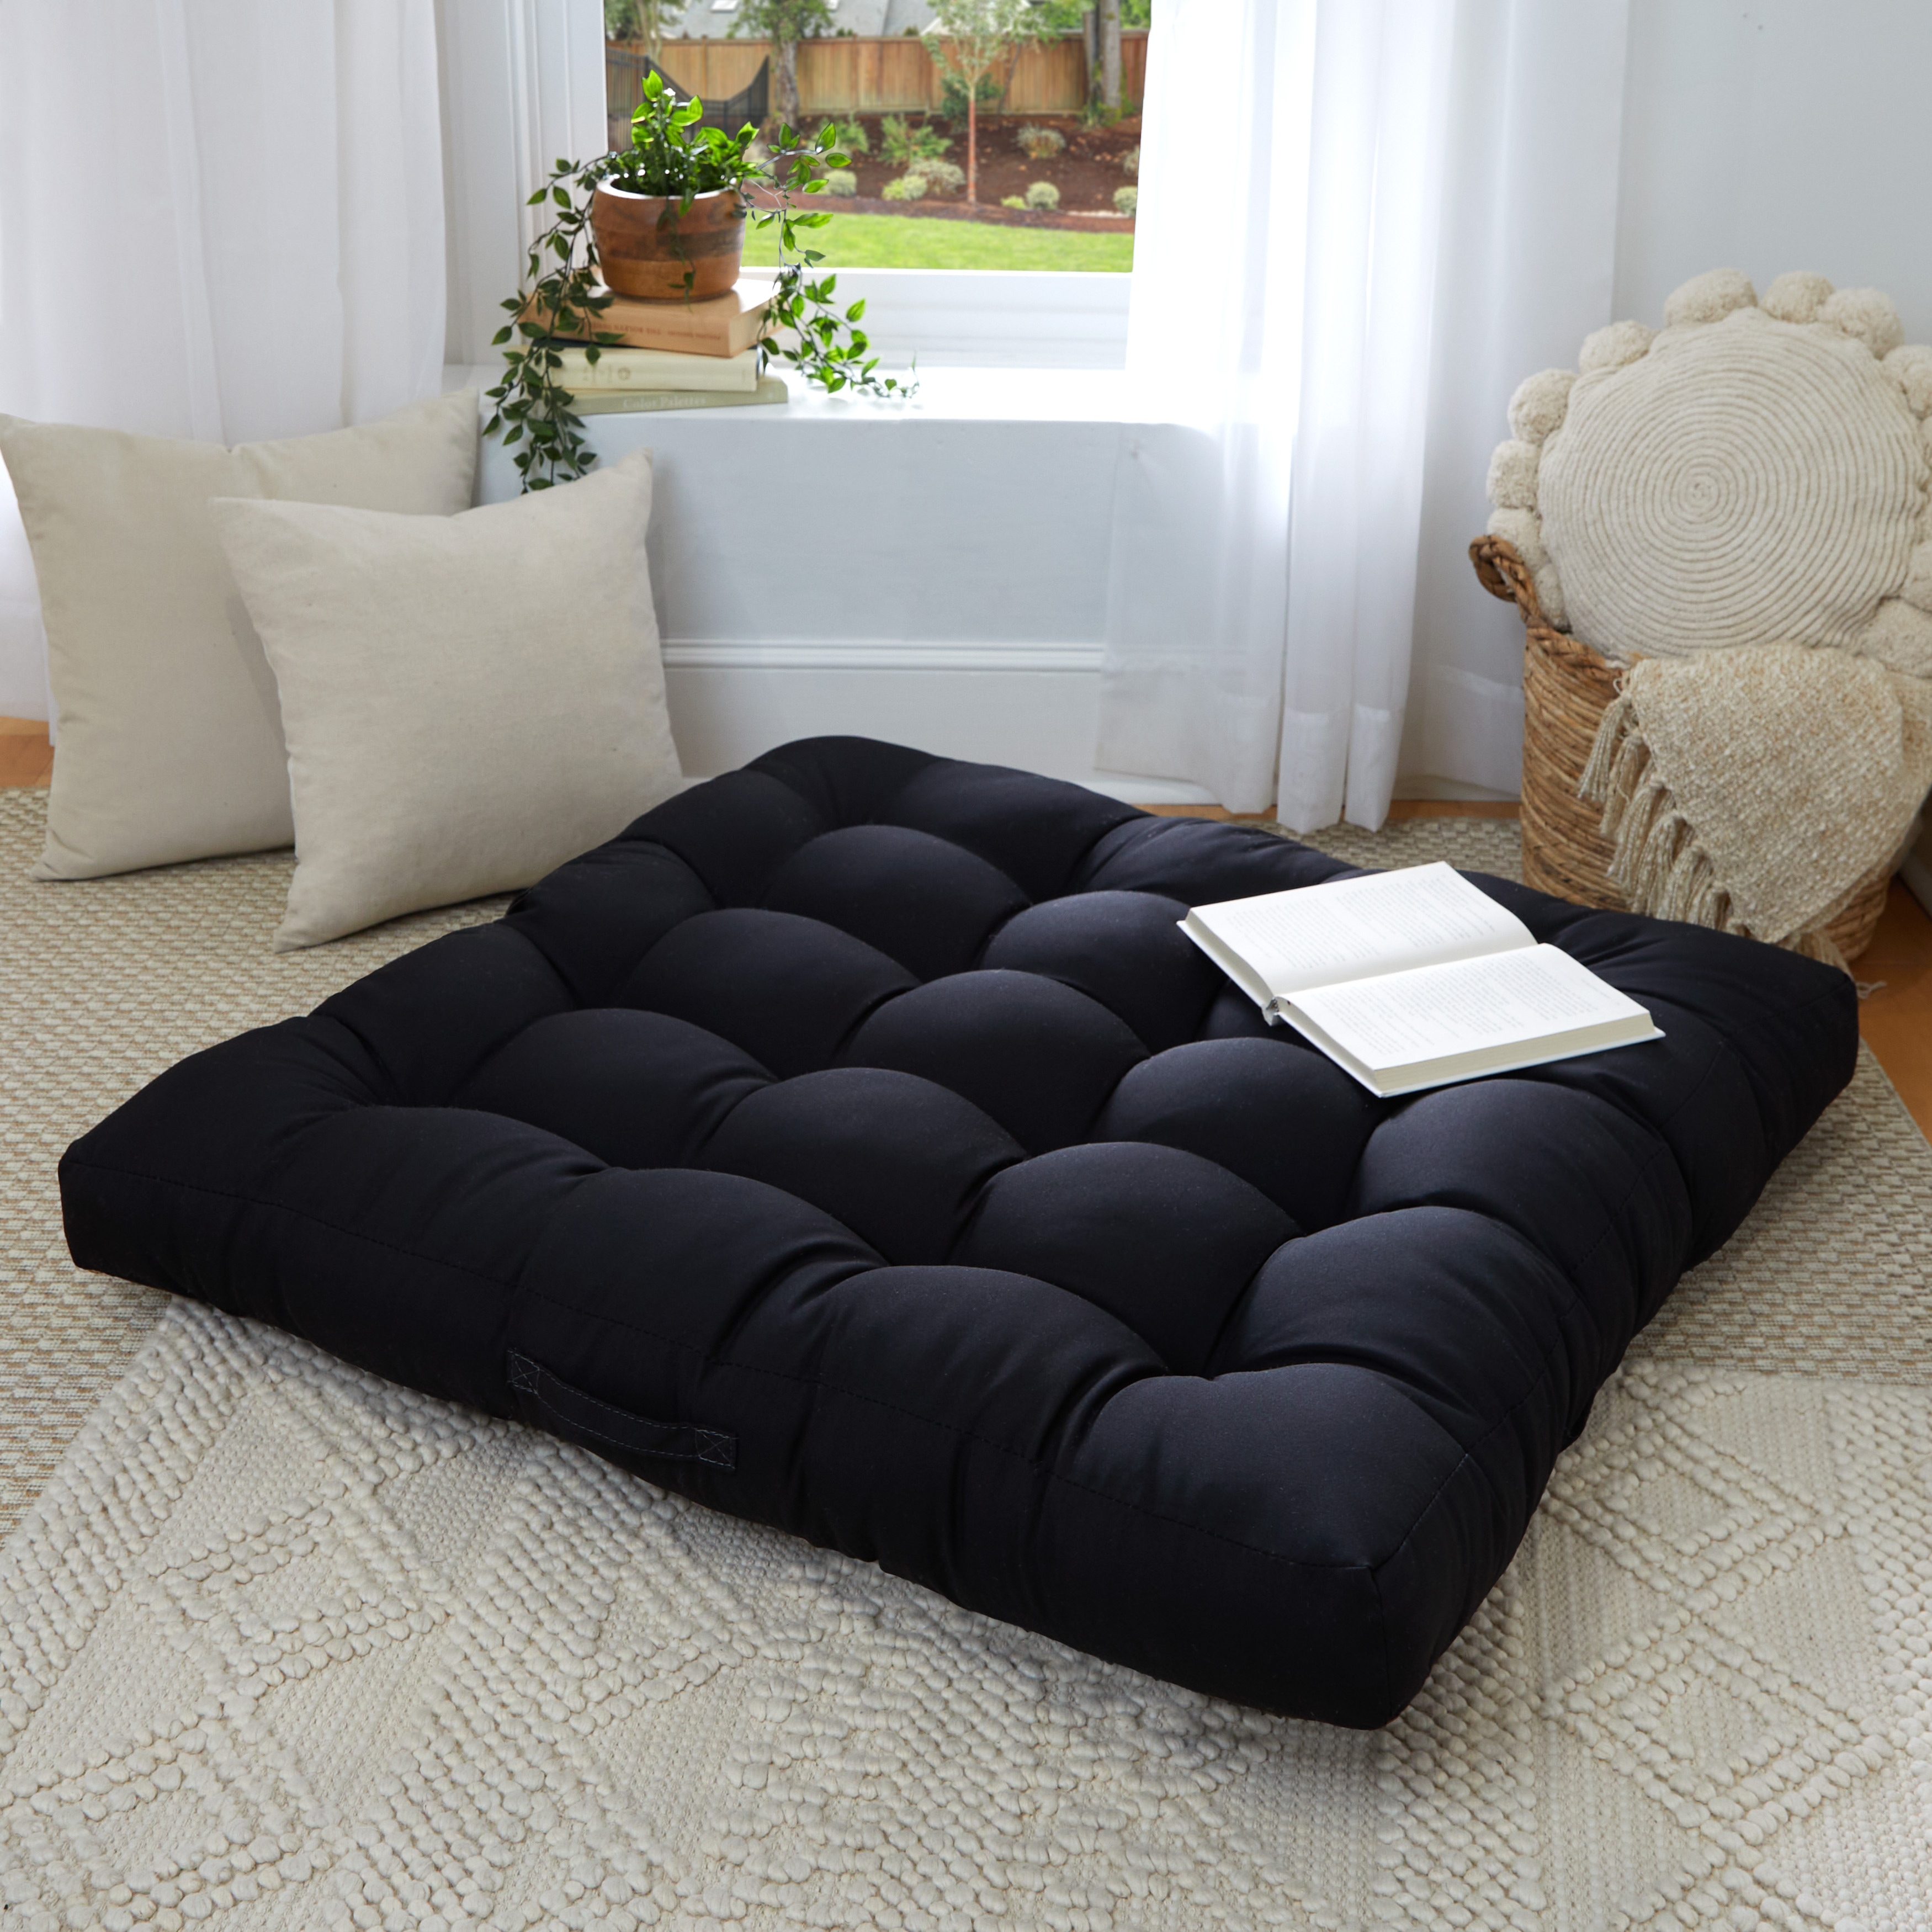 Rainha - Puffy Tufted Floor Pillow - Black